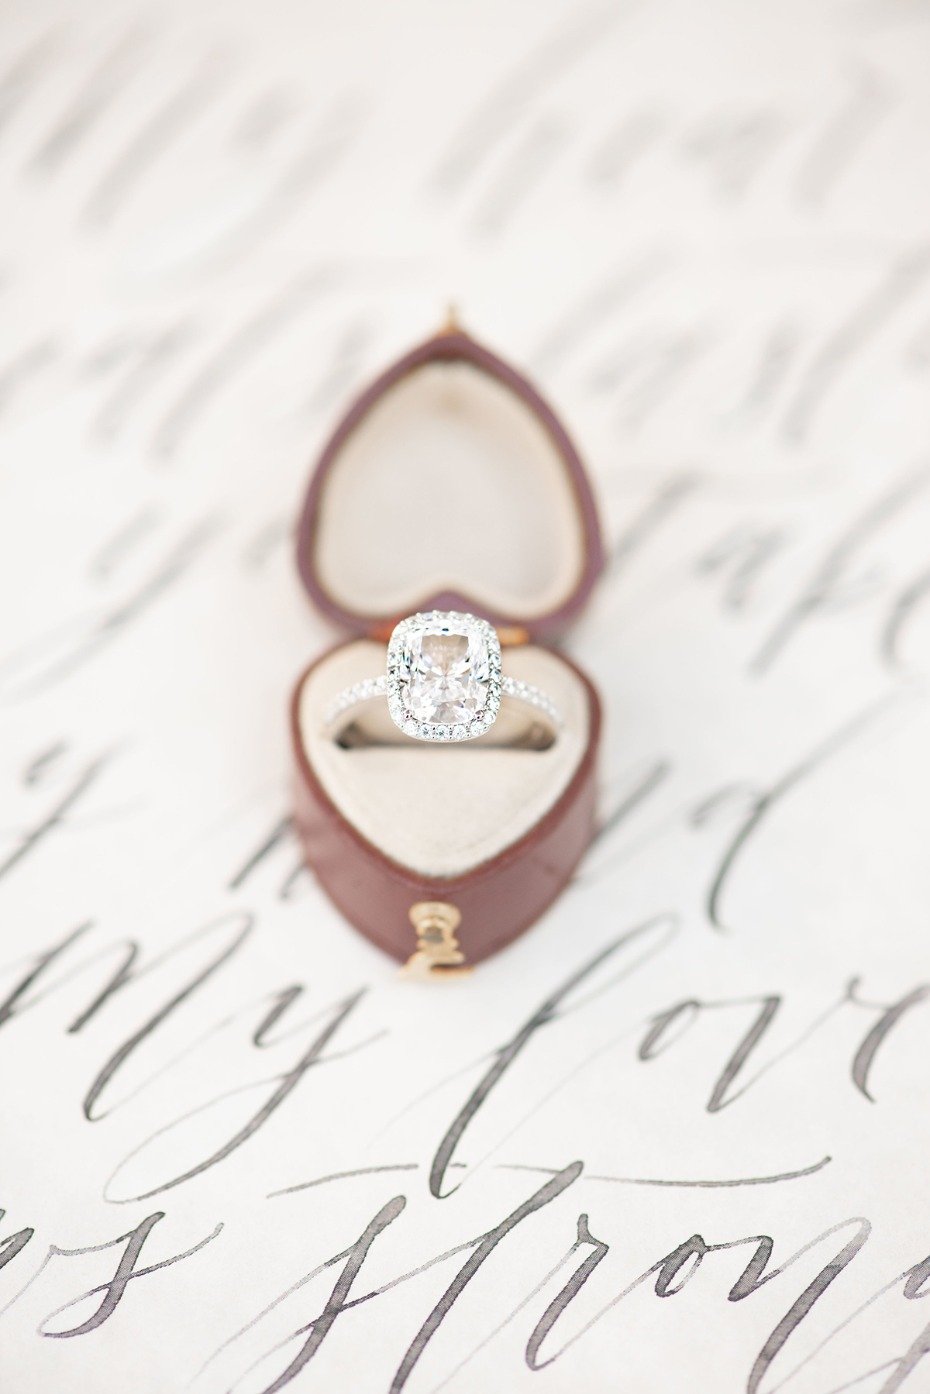 wedding ring and heart shaped ring box